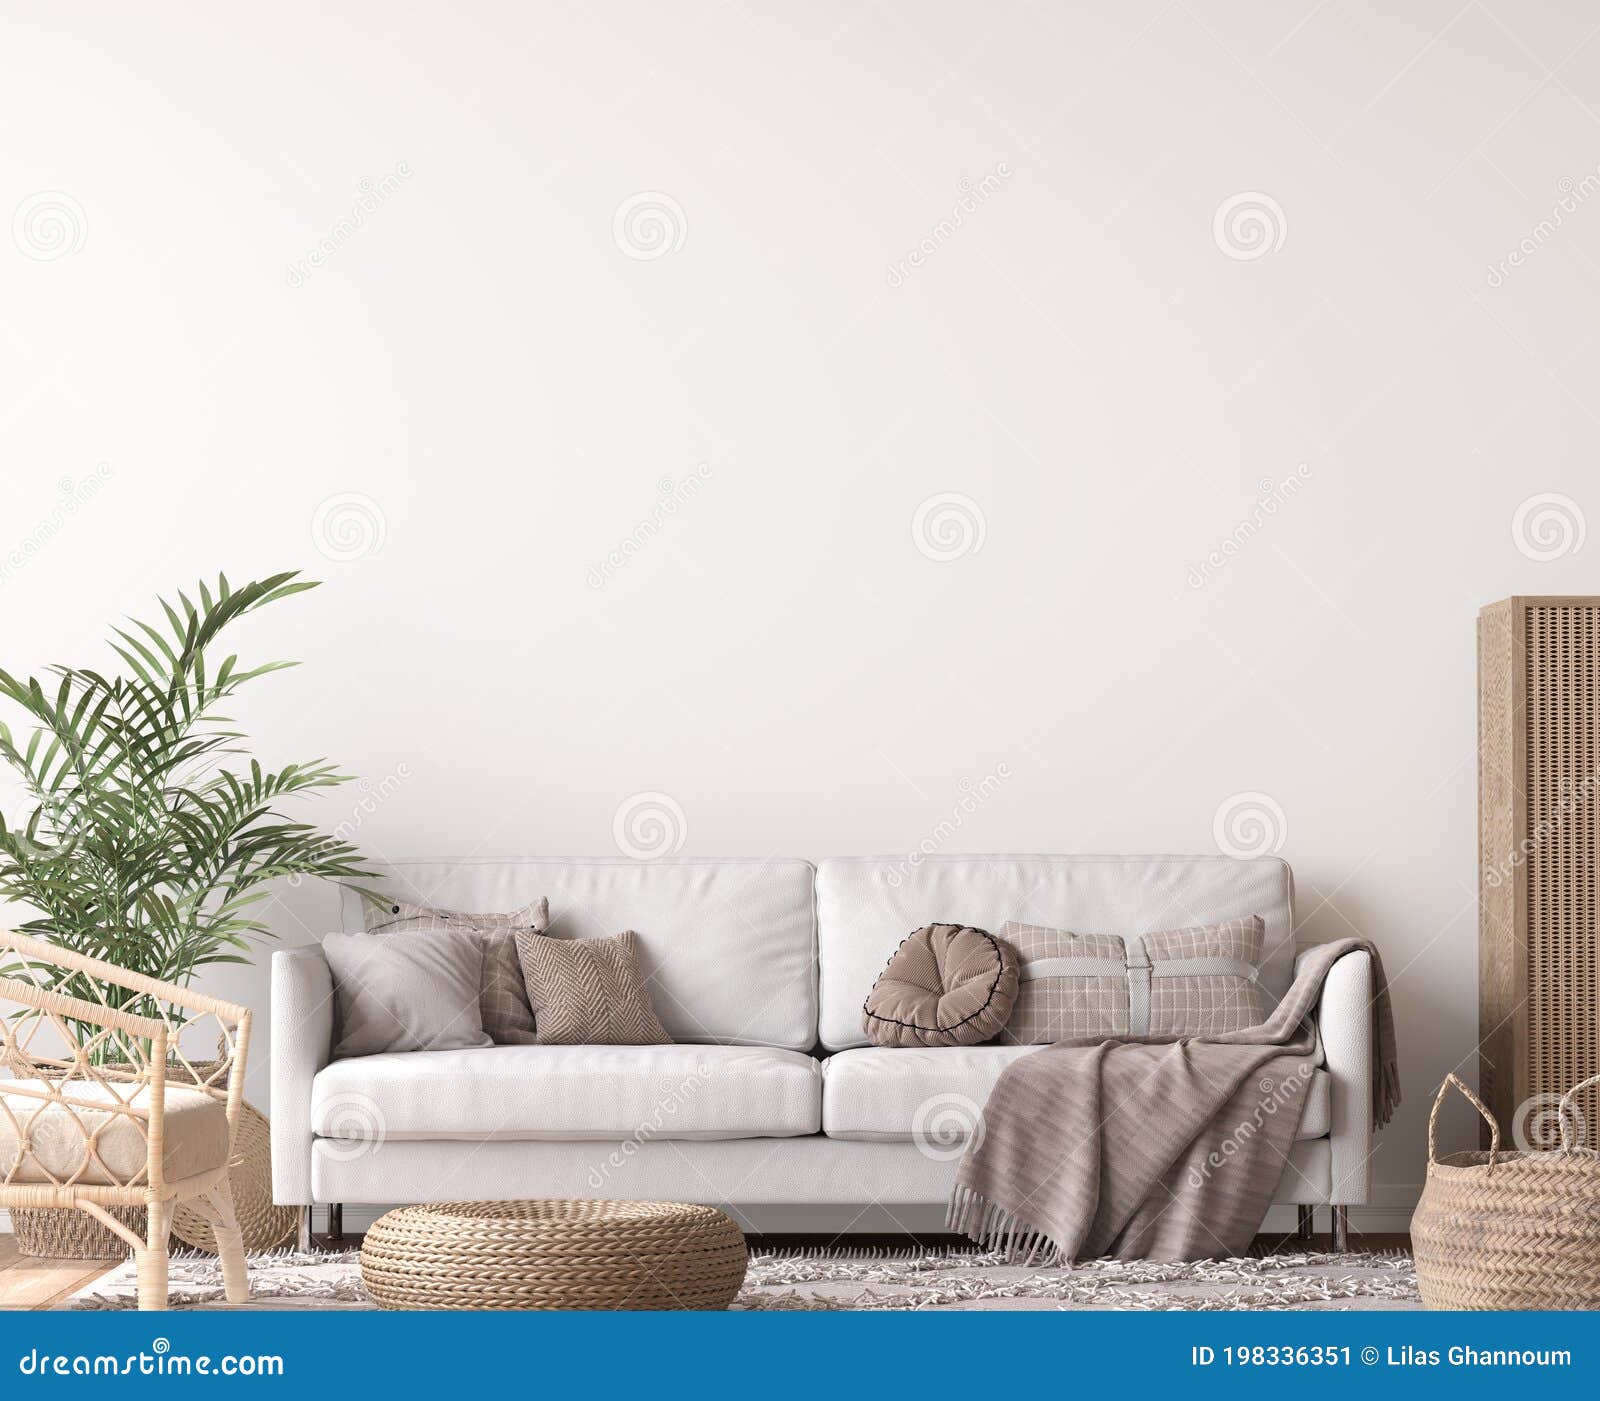 wall mockup in living room , white sofa in scandinavian interior